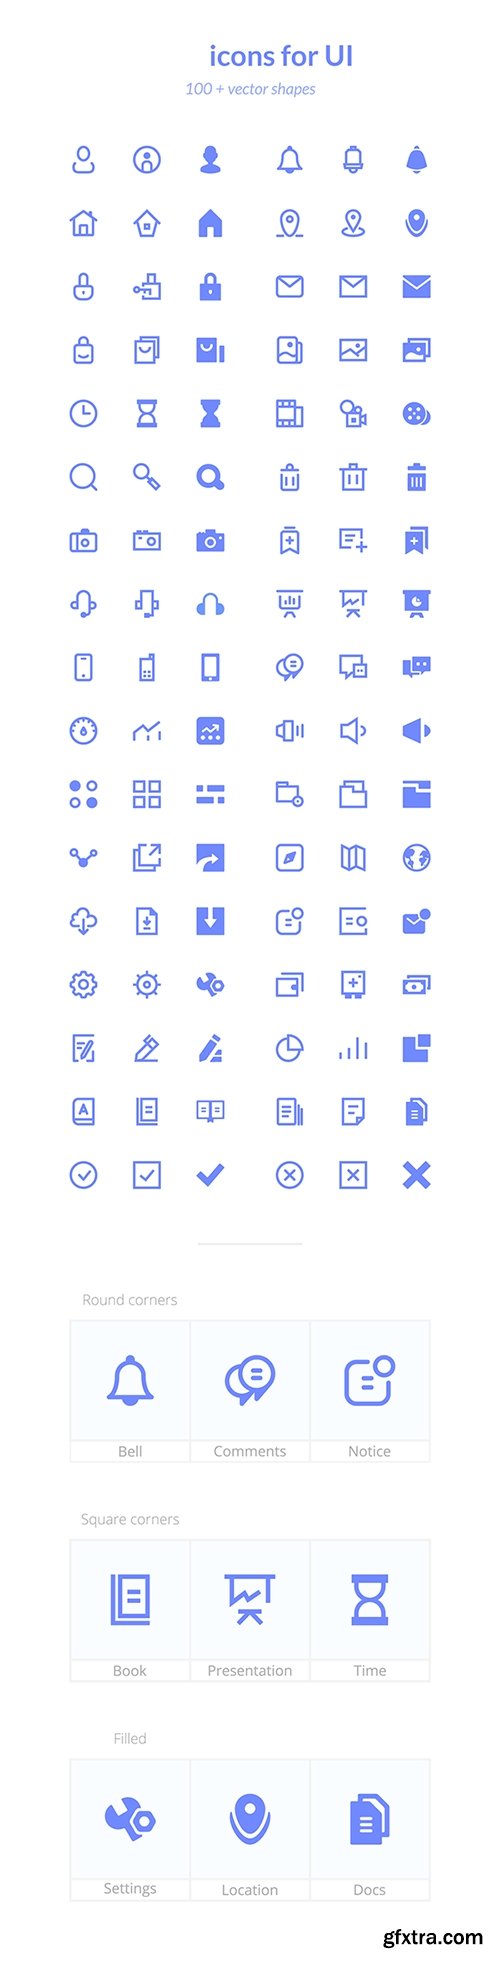 PSD, AI, EPS Web Icons - Basic Icons For User Interface (November 2014)